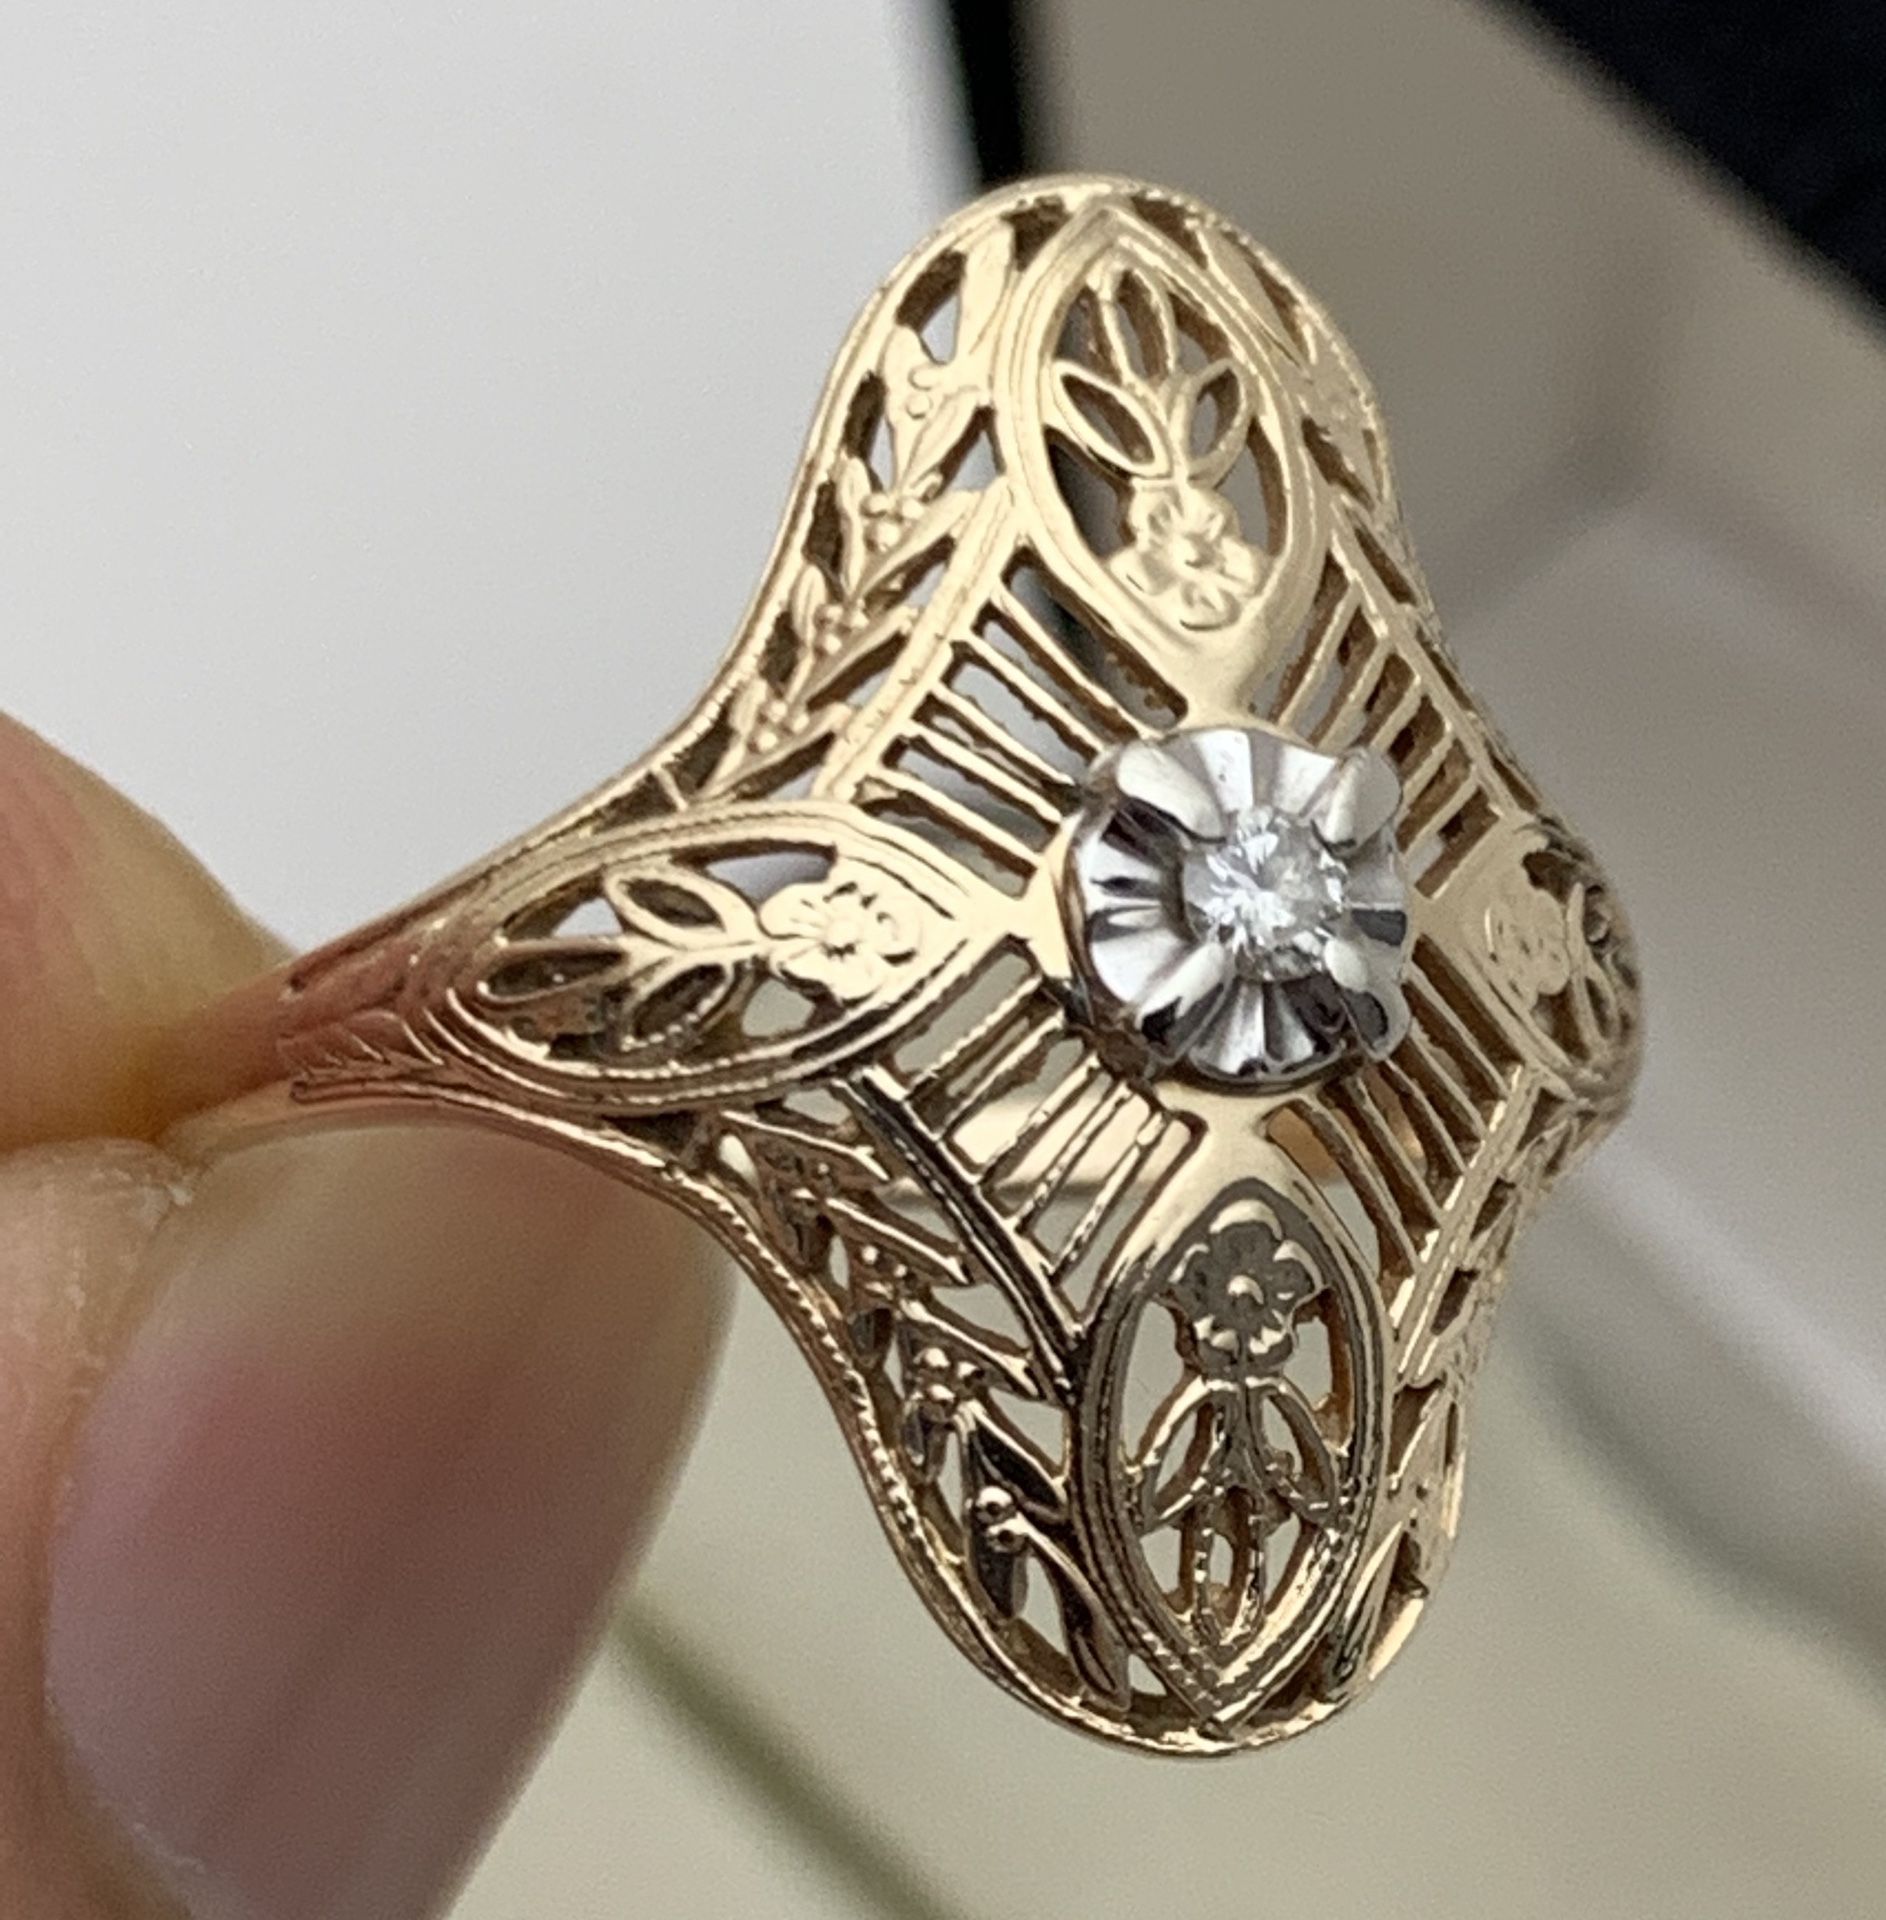 10k Solid Gold Filigree Ring w/ genuine natural diamond Size: 6 3/4.